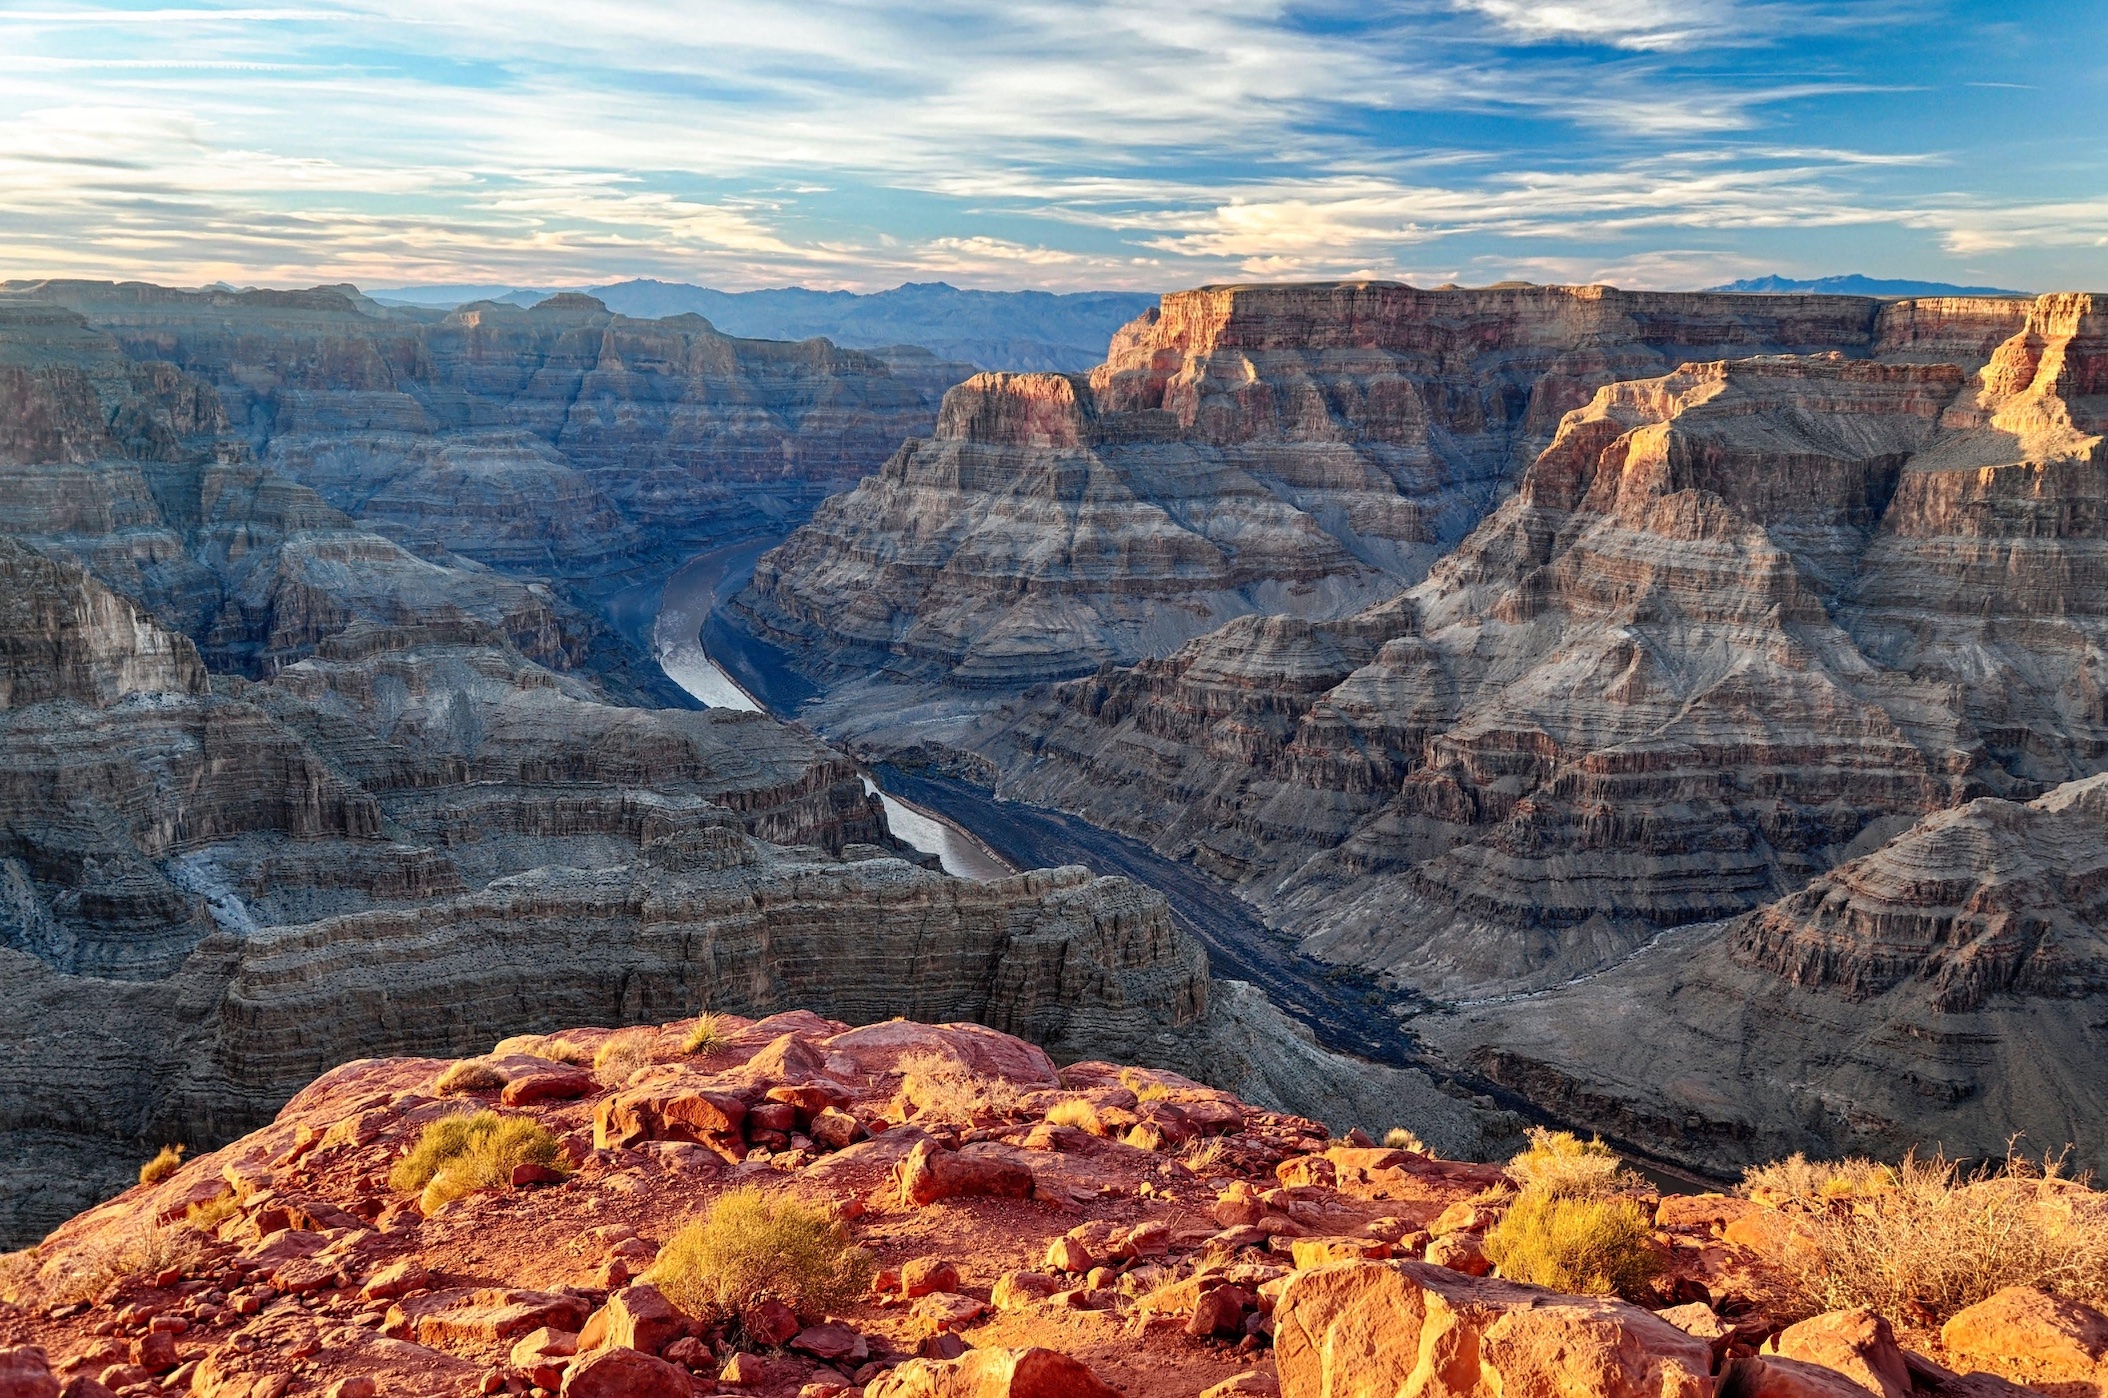 Grand Canyon; image by Omer Nezih Gerek, via Unsplash.com.